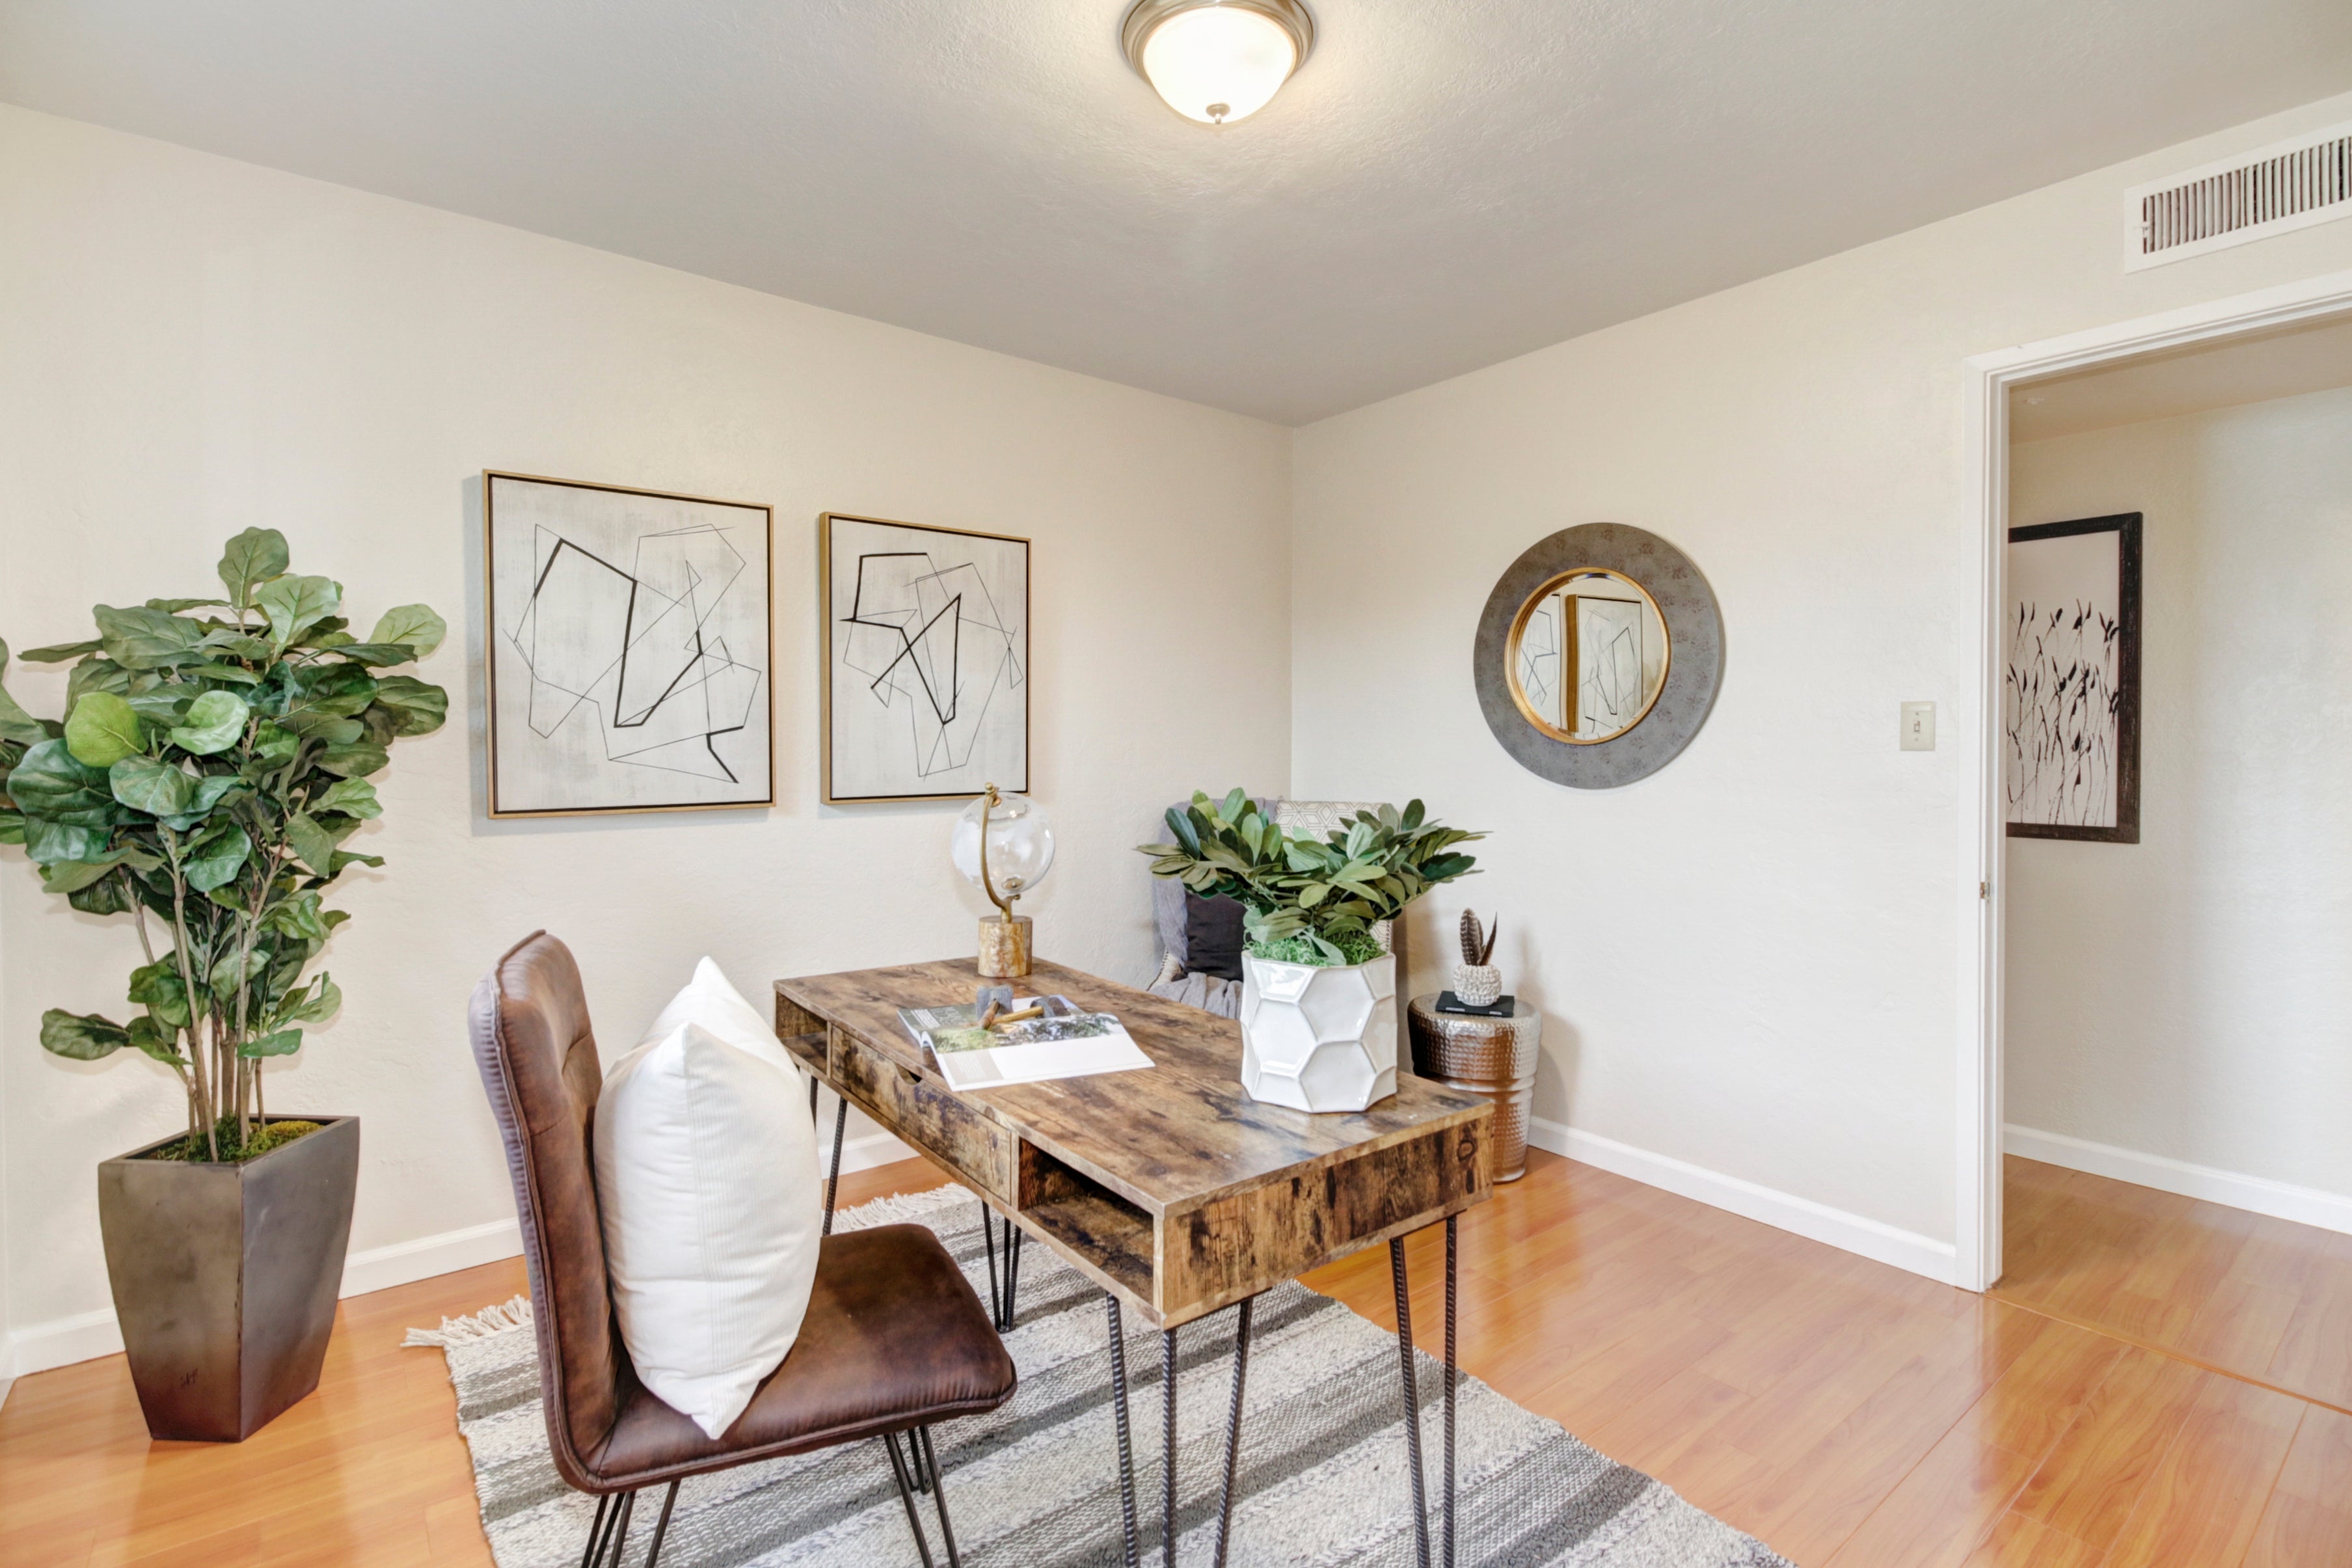 Premiere Home Staging Projects | Home office interior design idea - Monte Vista Way, Sacramento